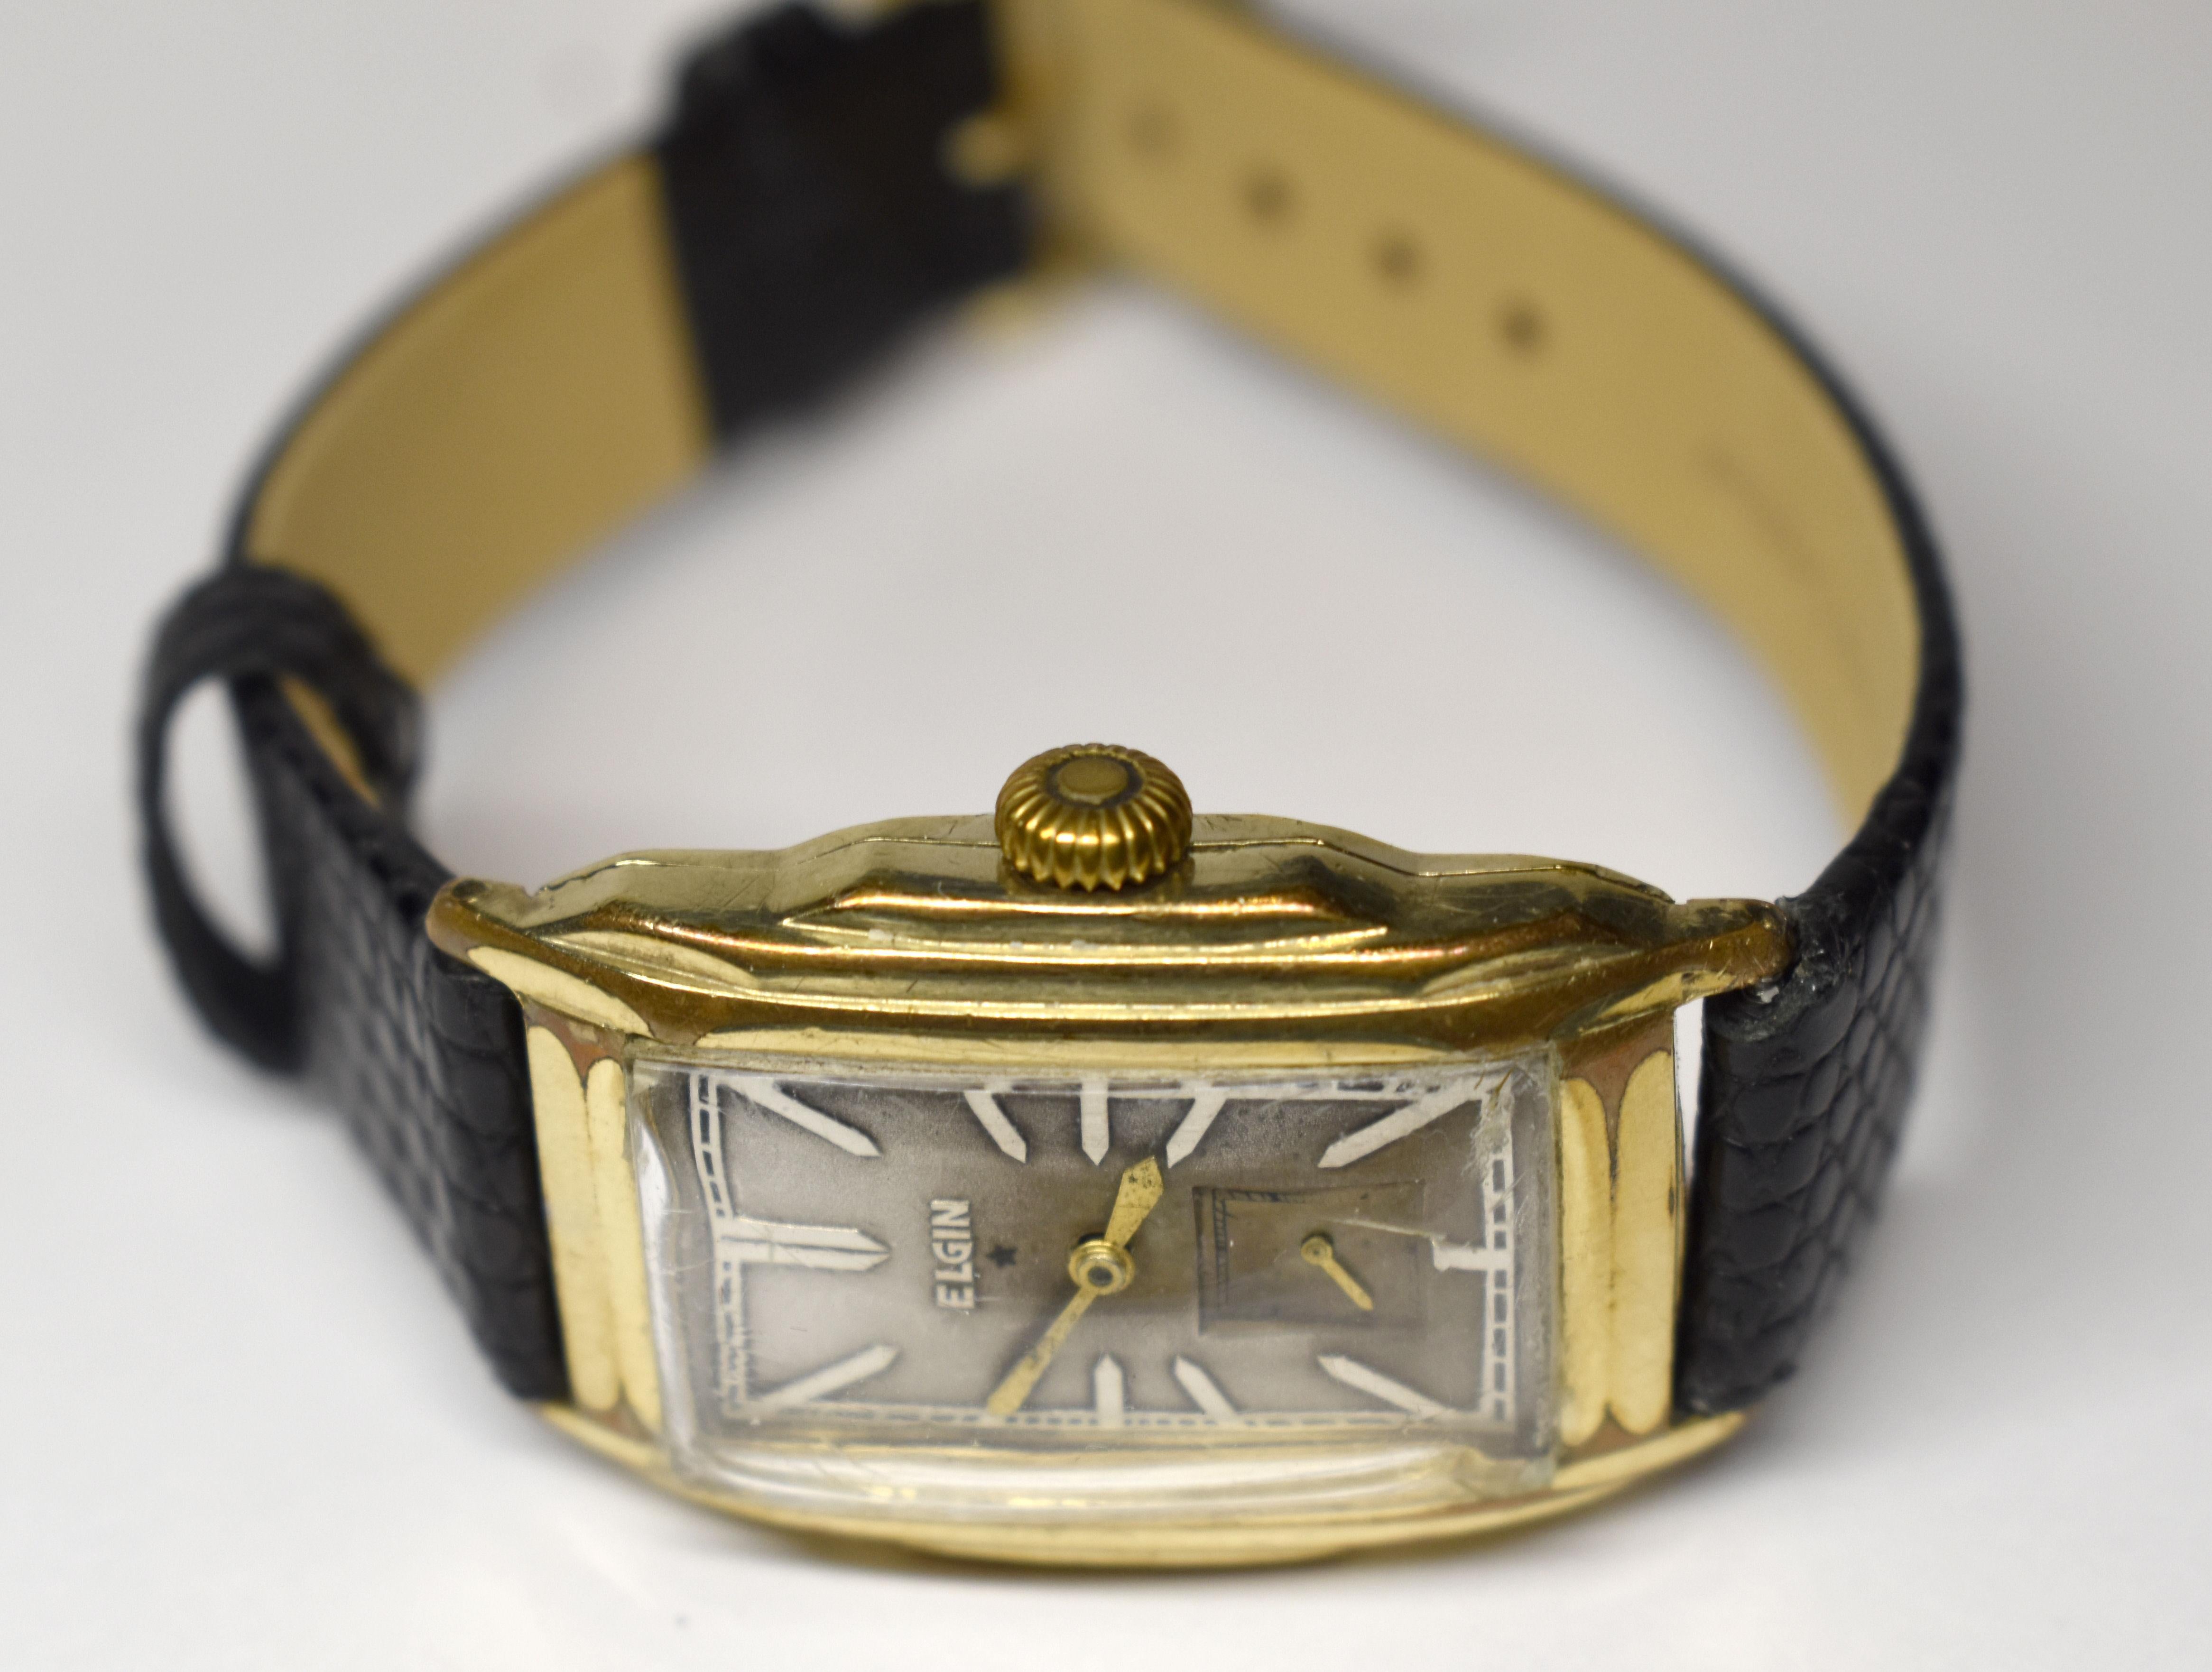 Men's Art Deco Gents 14k Gold Filled Watch by Elgin, 1934